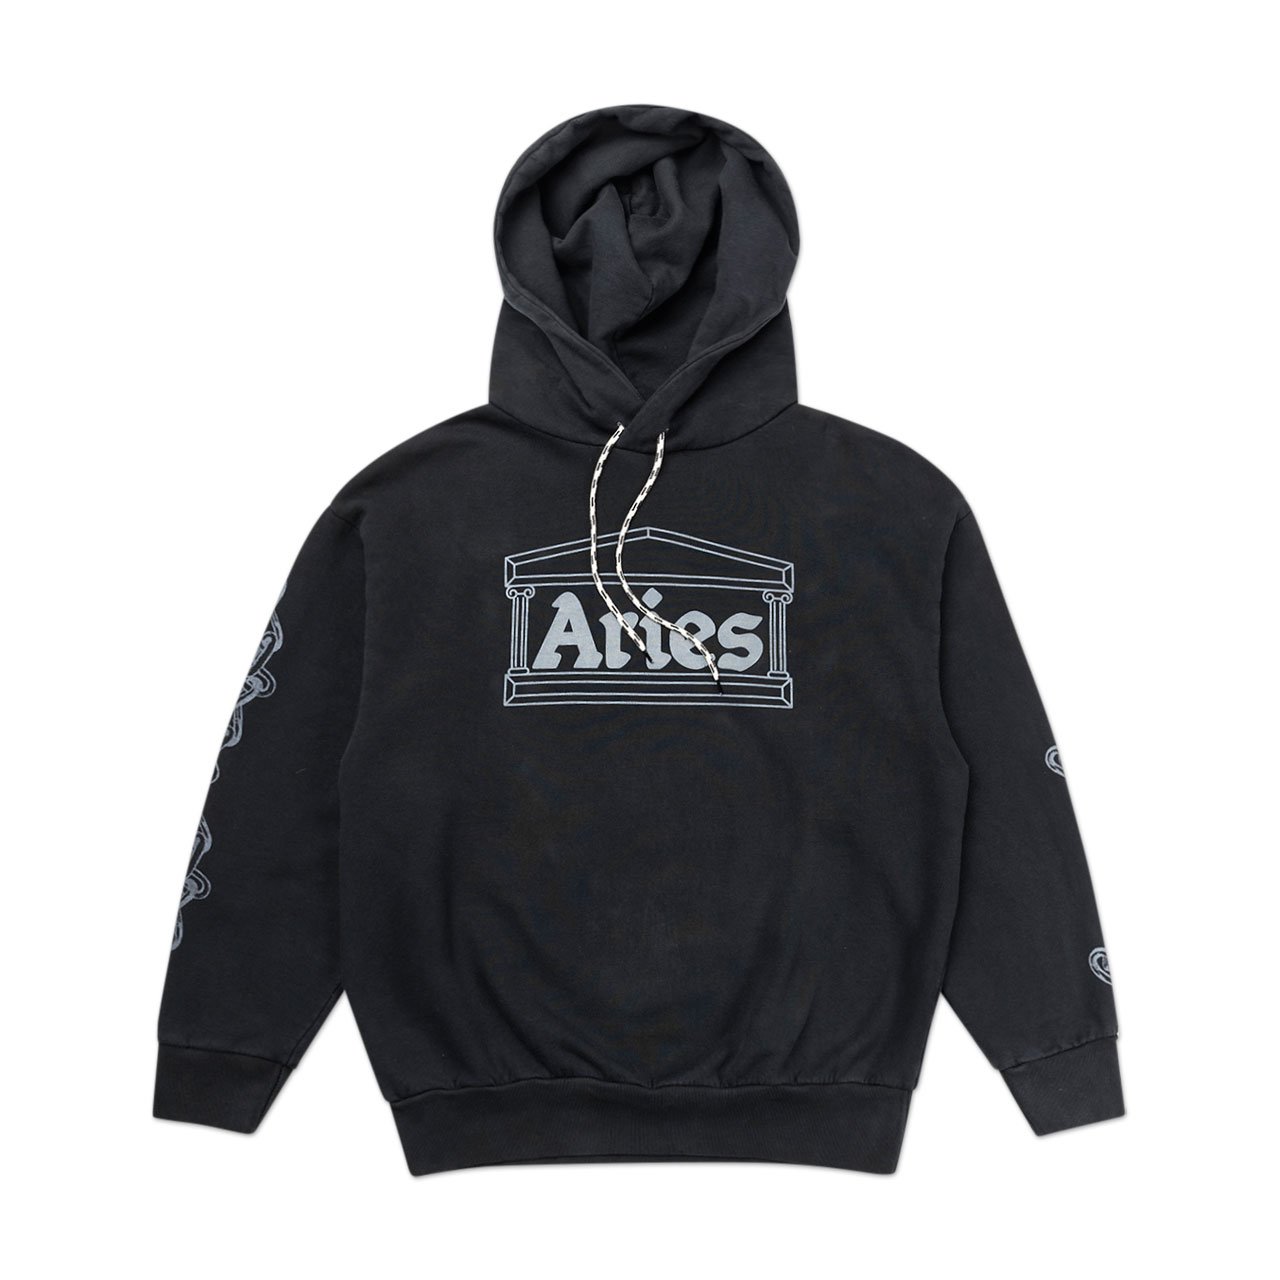 aries 2 chains hoodie (black / grey) - fqar20008-blk - a.plus - Image - 1